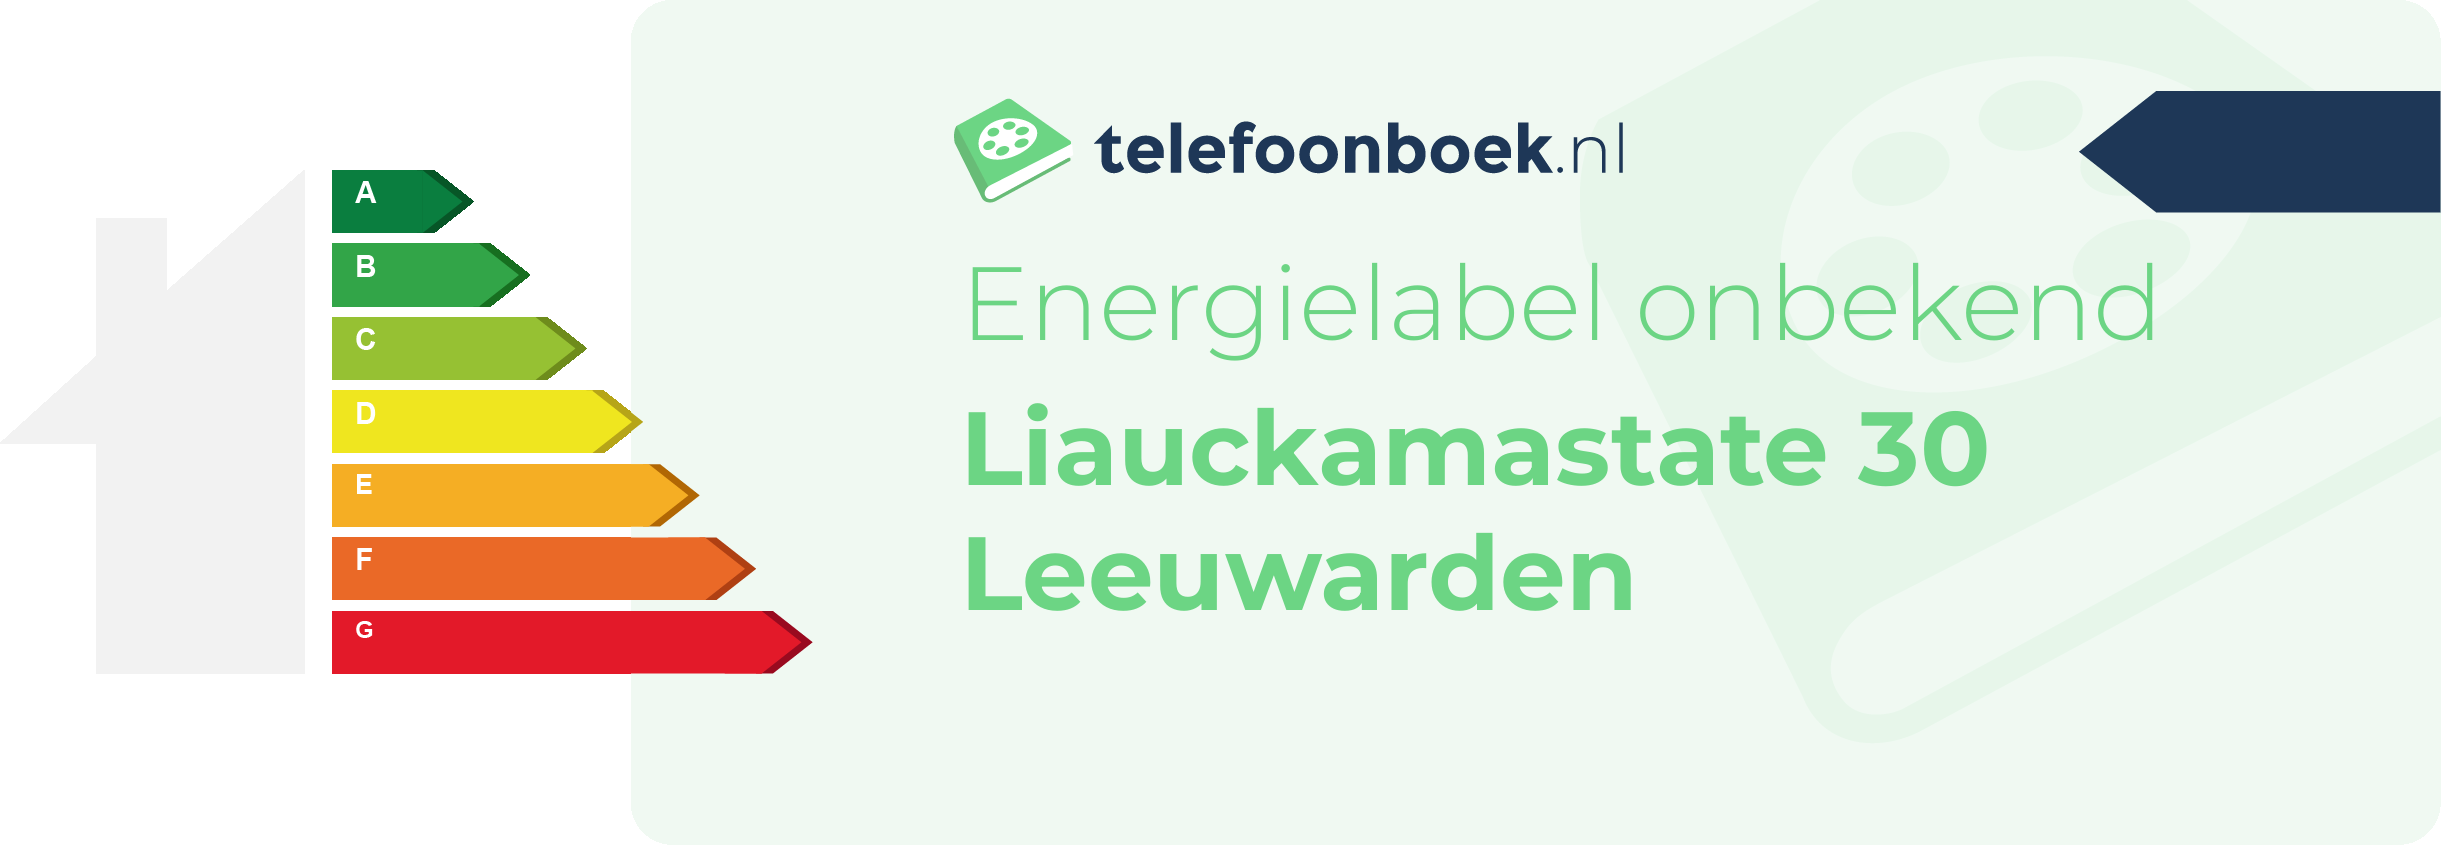 Energielabel Liauckamastate 30 Leeuwarden